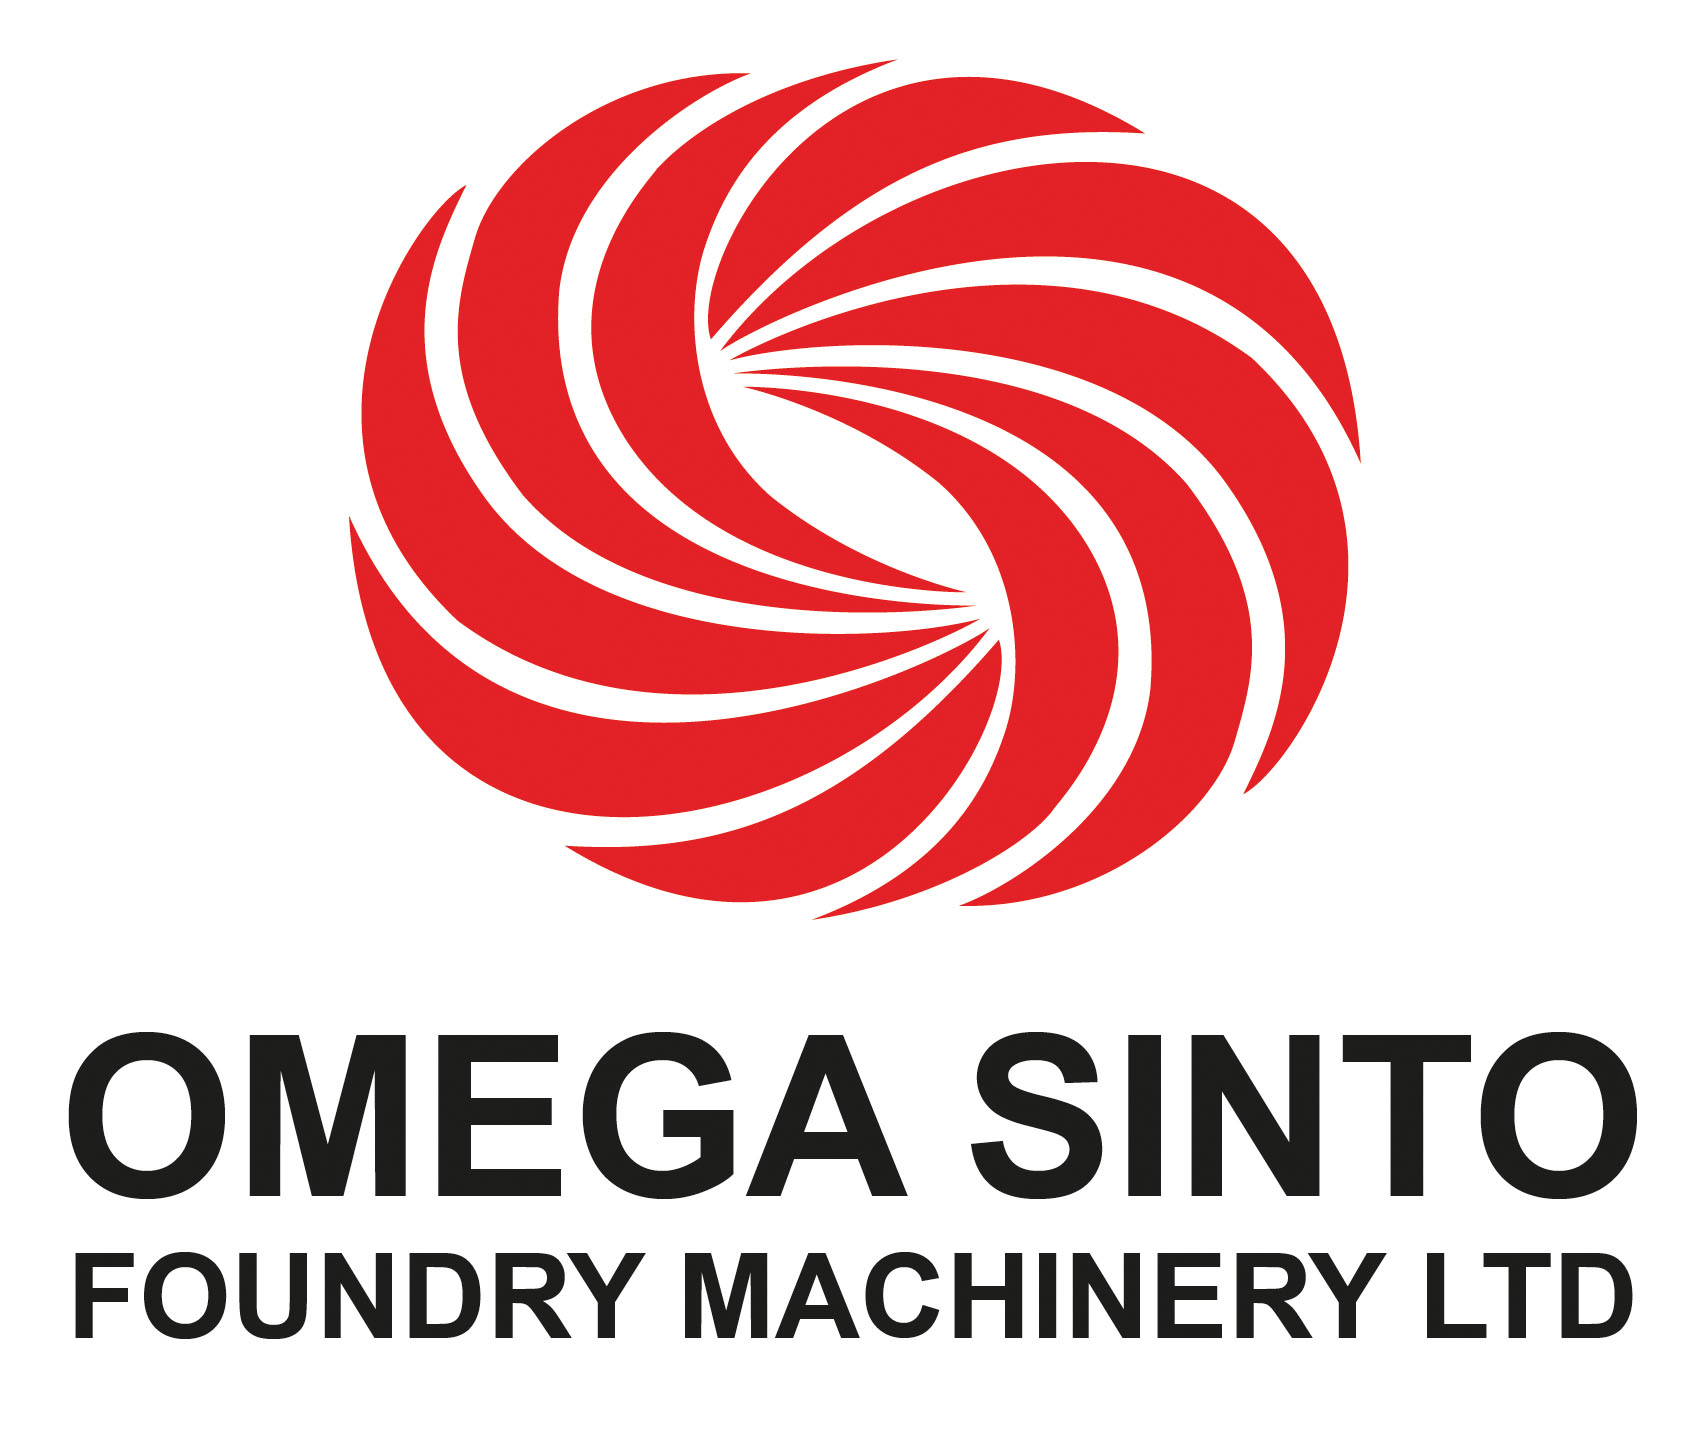 Omega Sinto Foundry Machinery Ltd